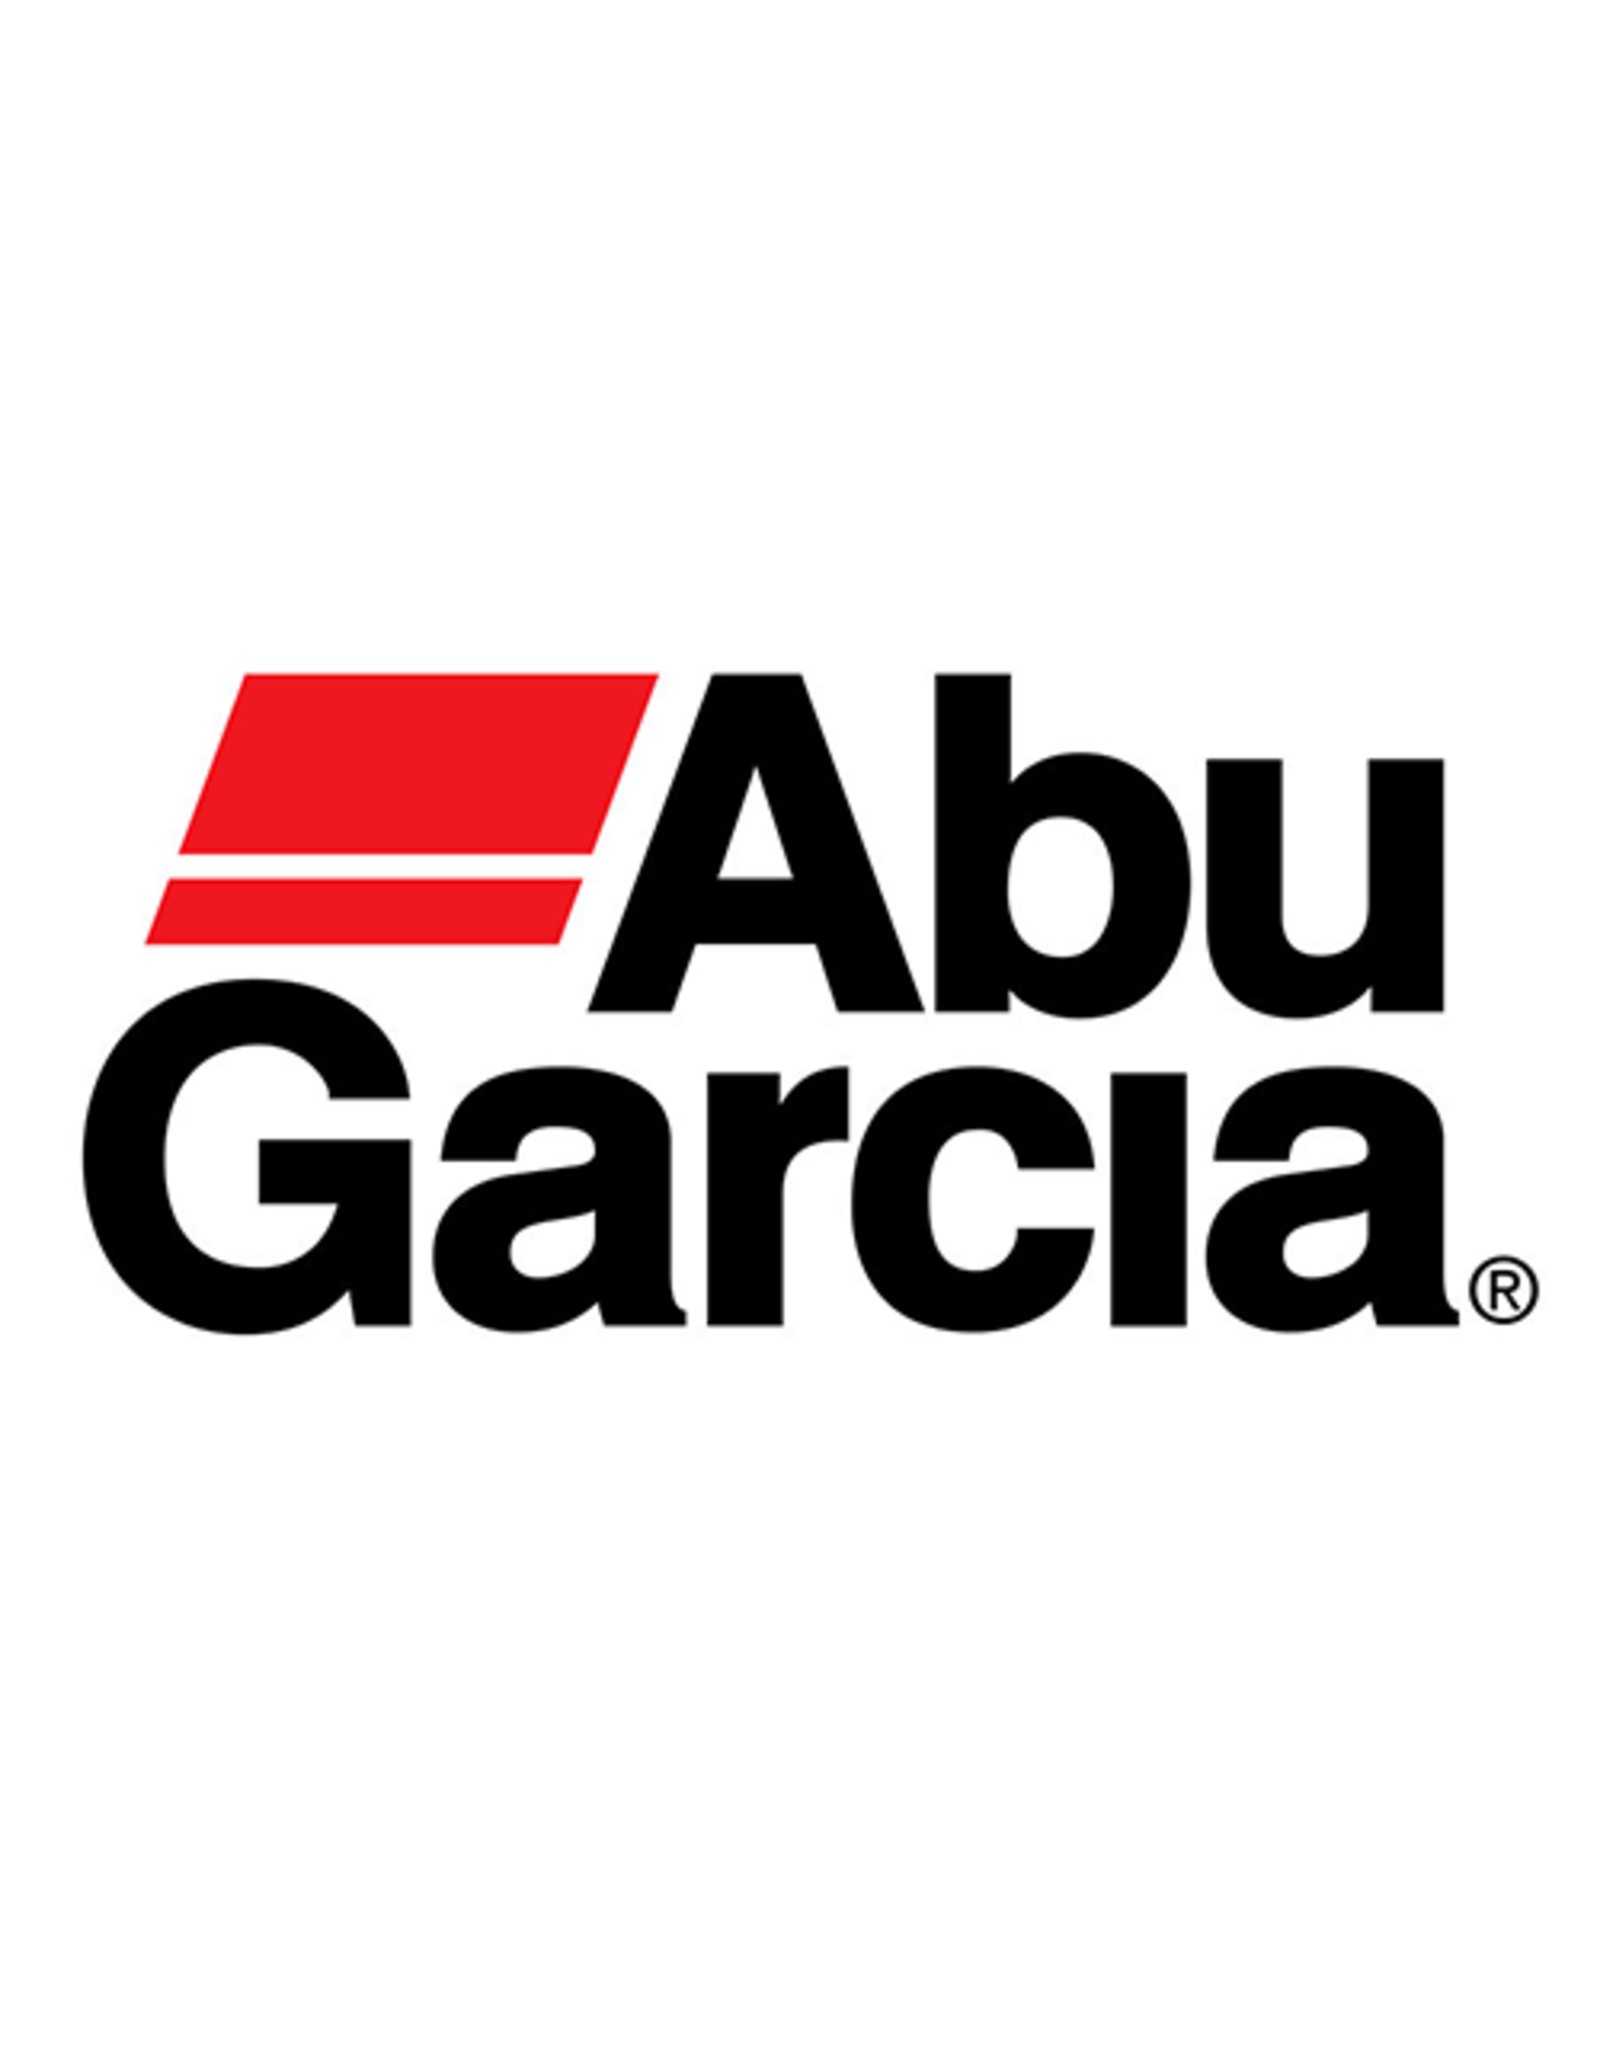 Abu Garcia 4464  CLICK SPRING